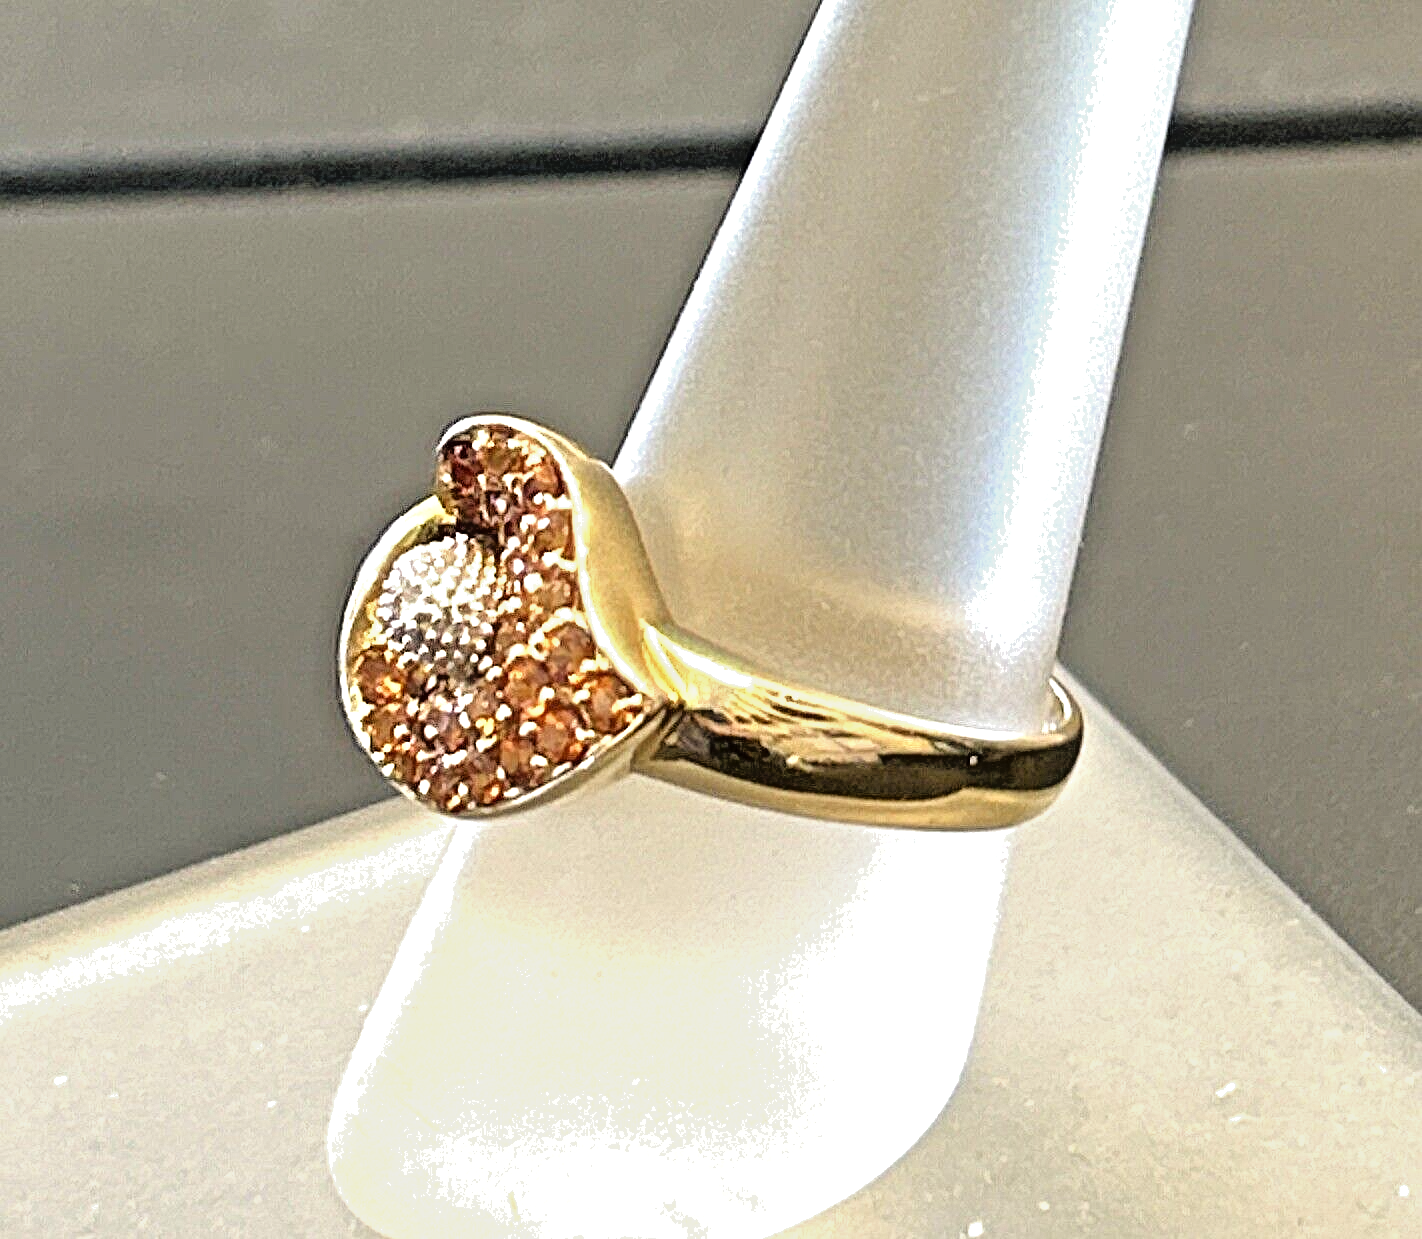 14k Gold Cocktail Ring w Topaz & Diamonds Size 7